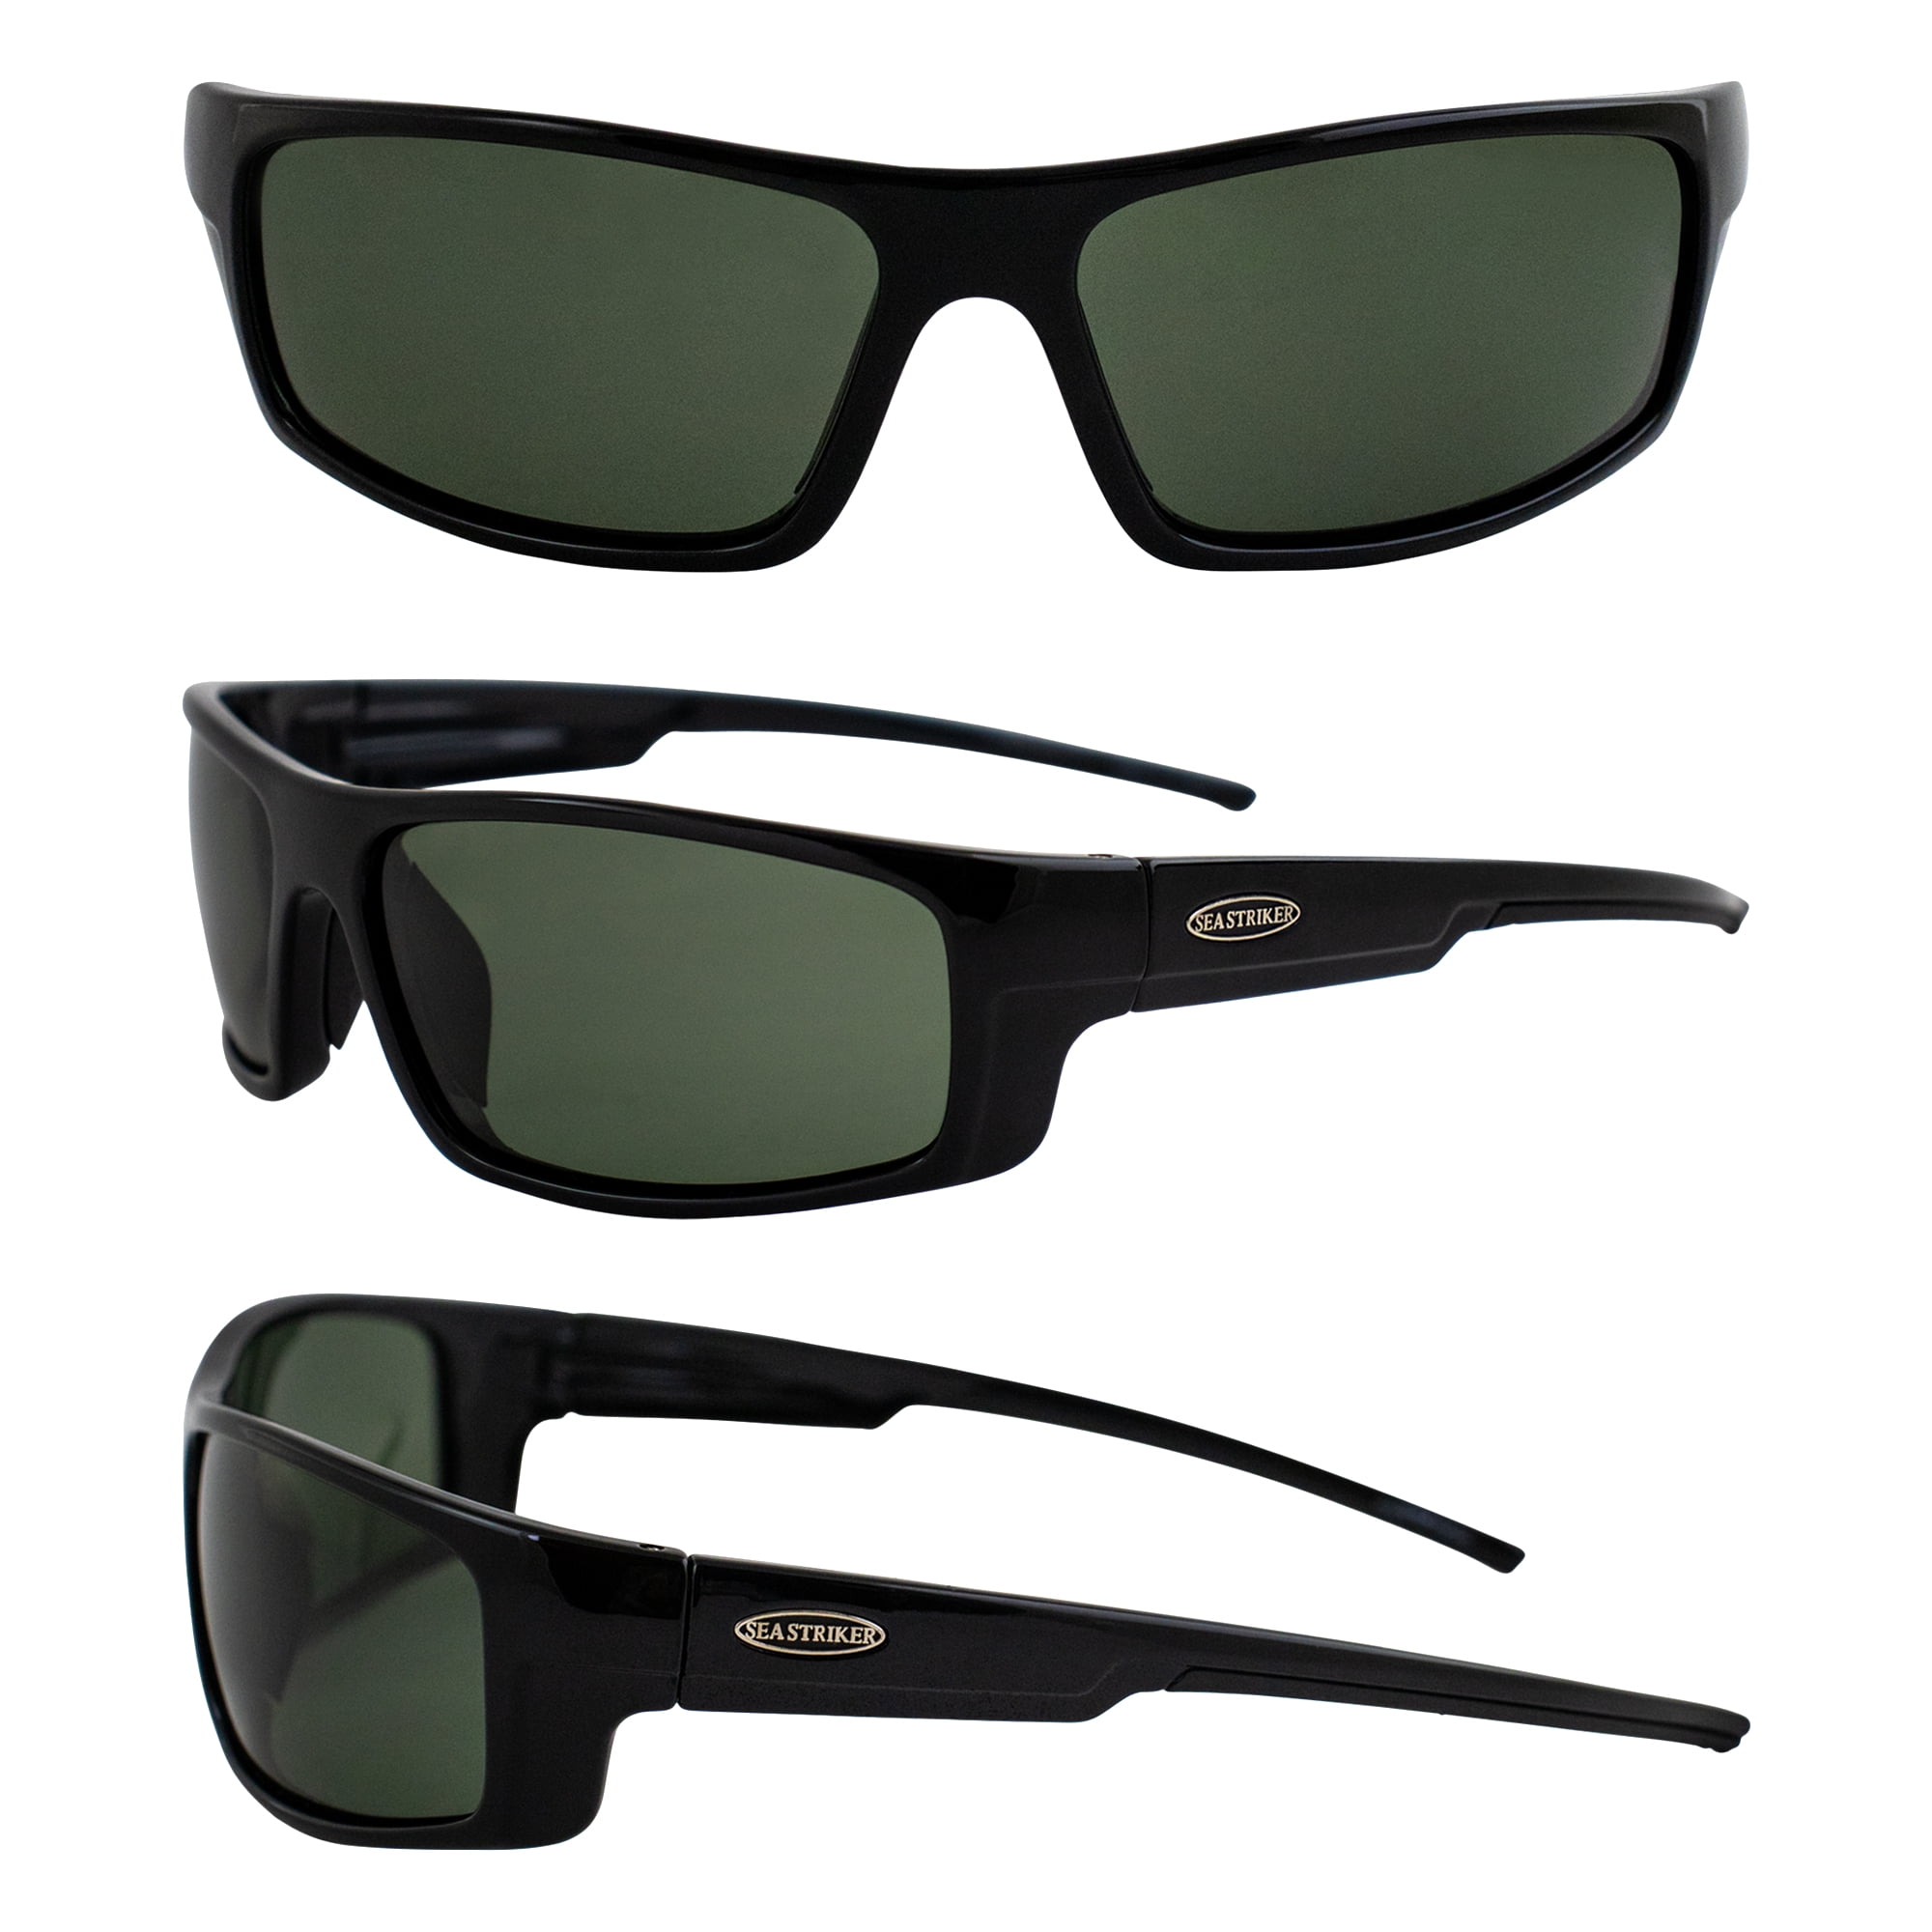 Sea Striker 230 Finatic Sunglasses Sunglasses Black Frame/Grey